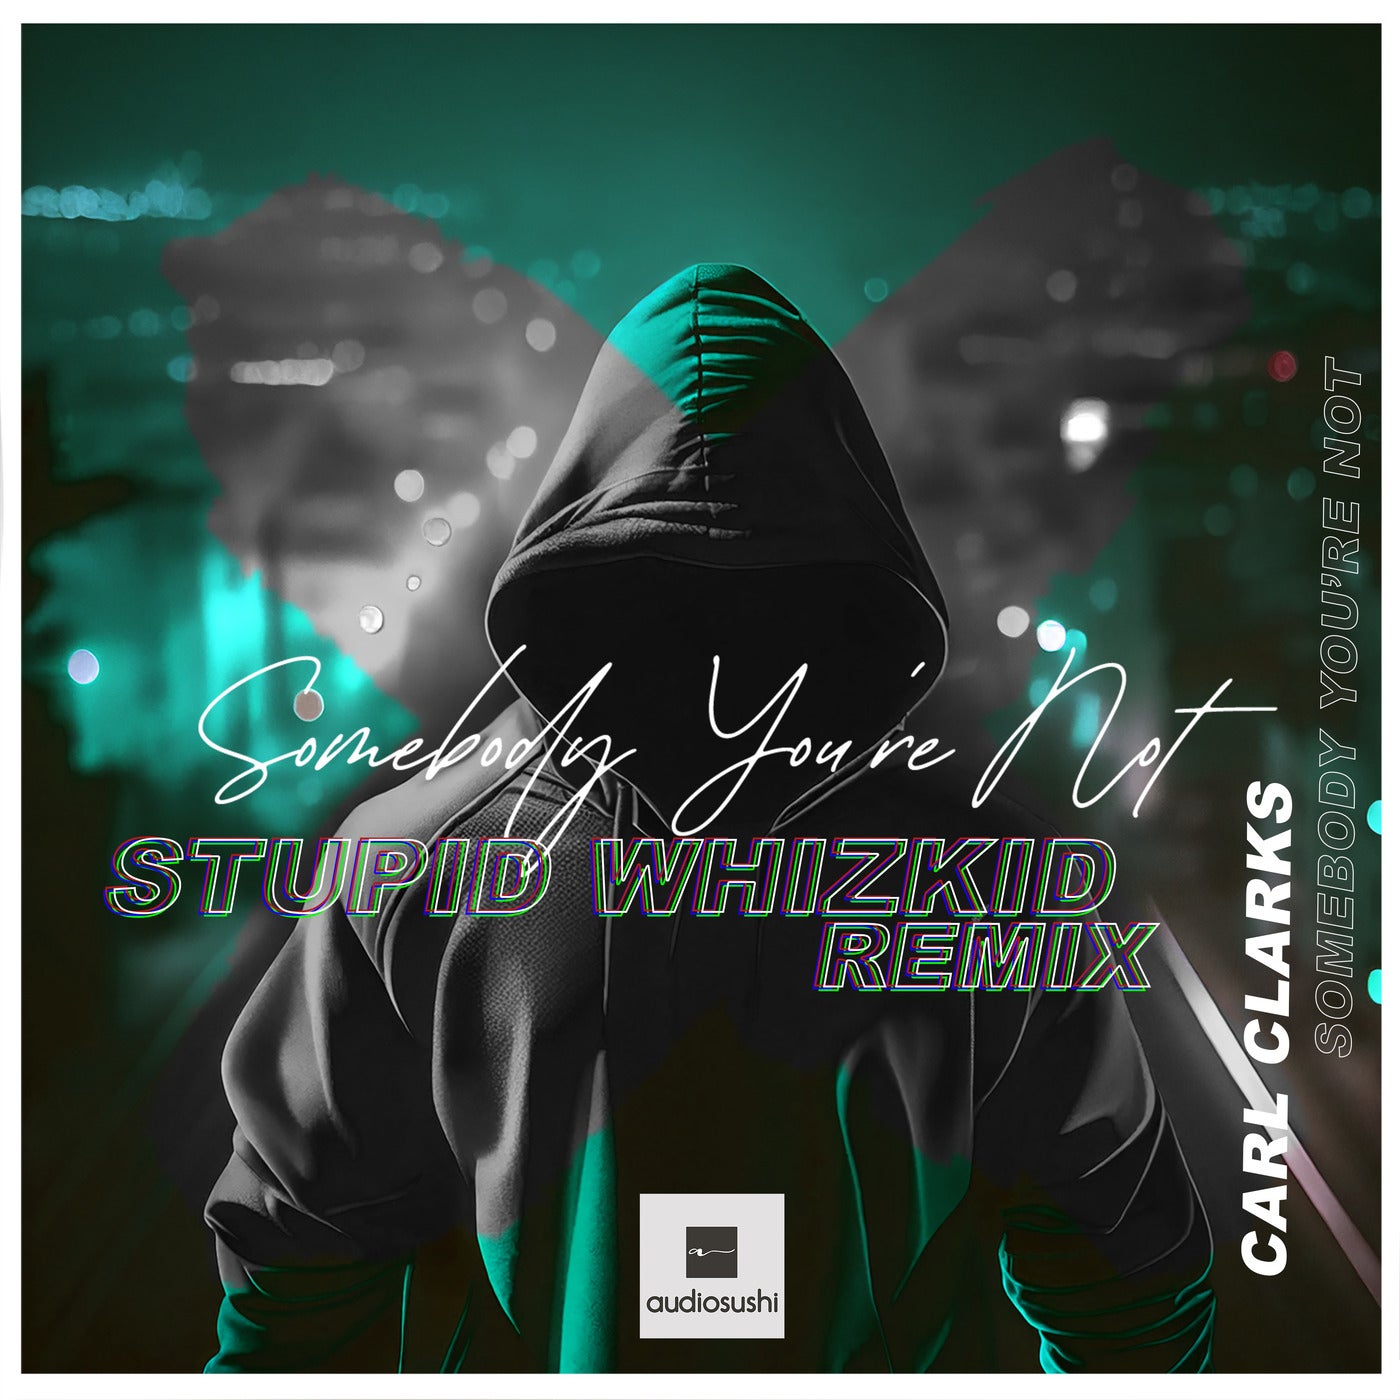 Somebody You're Not (Stupid Whizkid Remix)